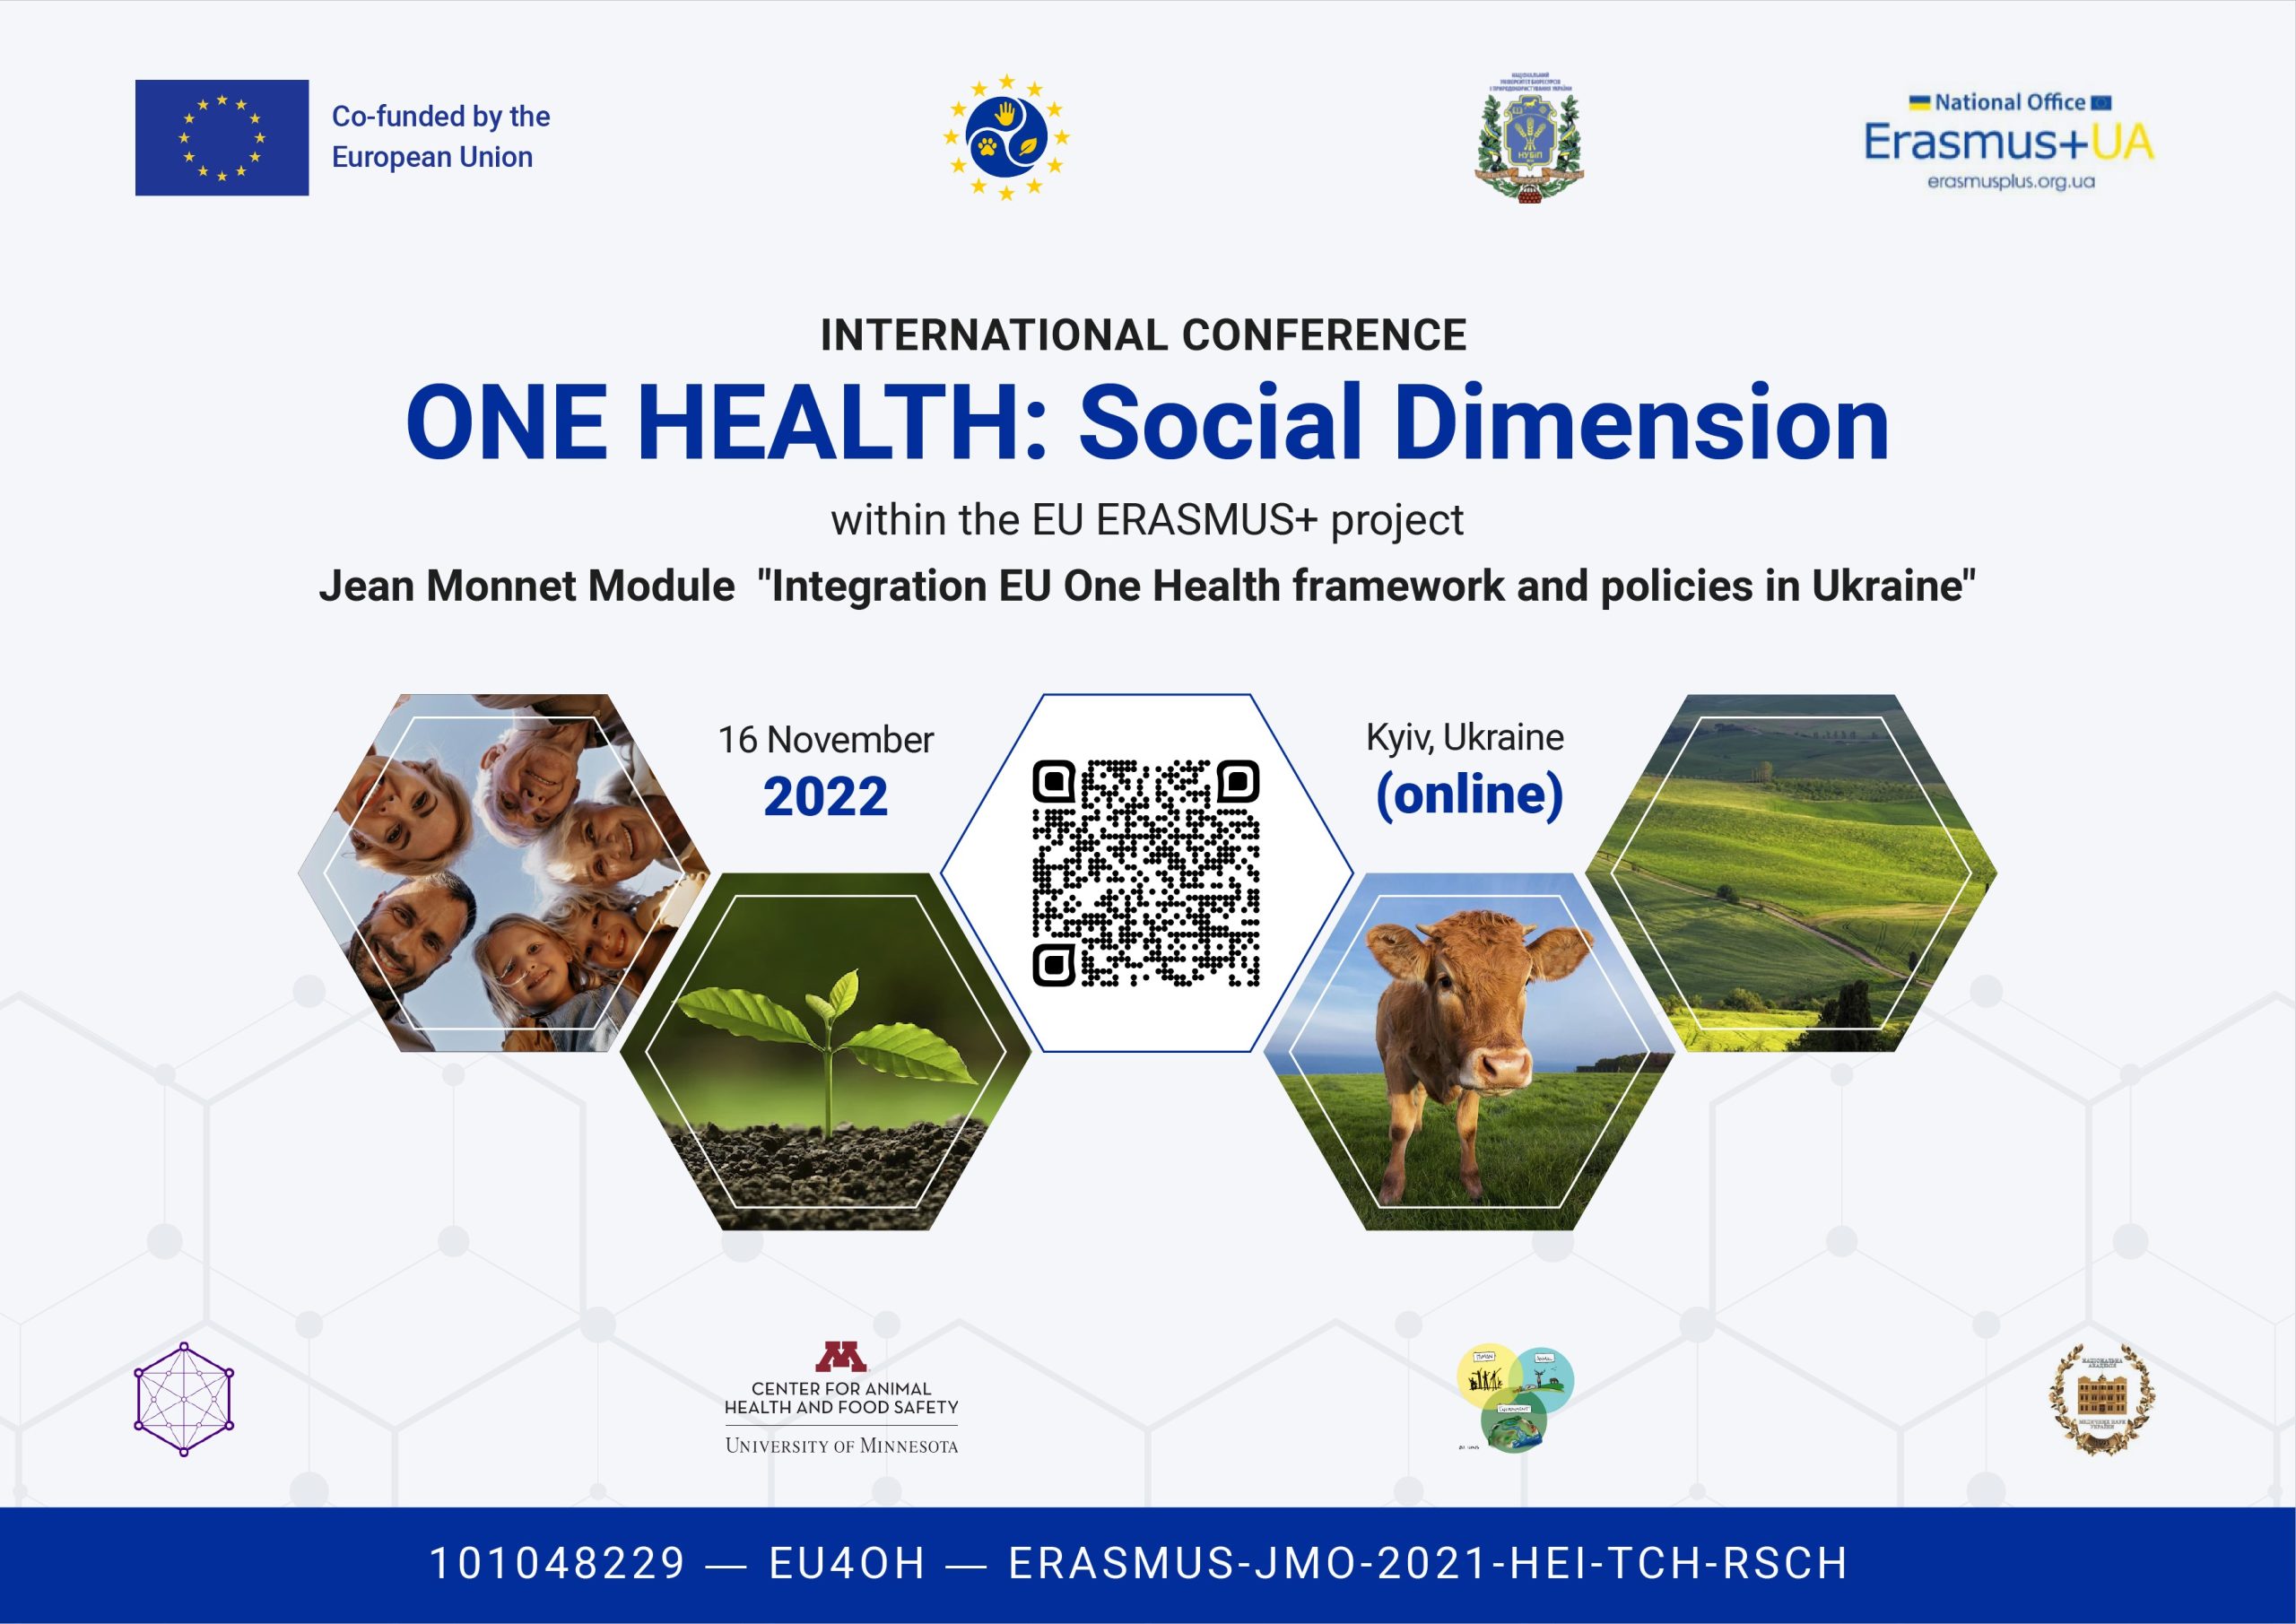 INTERNATIONAL CONFERENCE «ONE HEALTH: SOCIAL DIMENSION» held on 16 November 2022